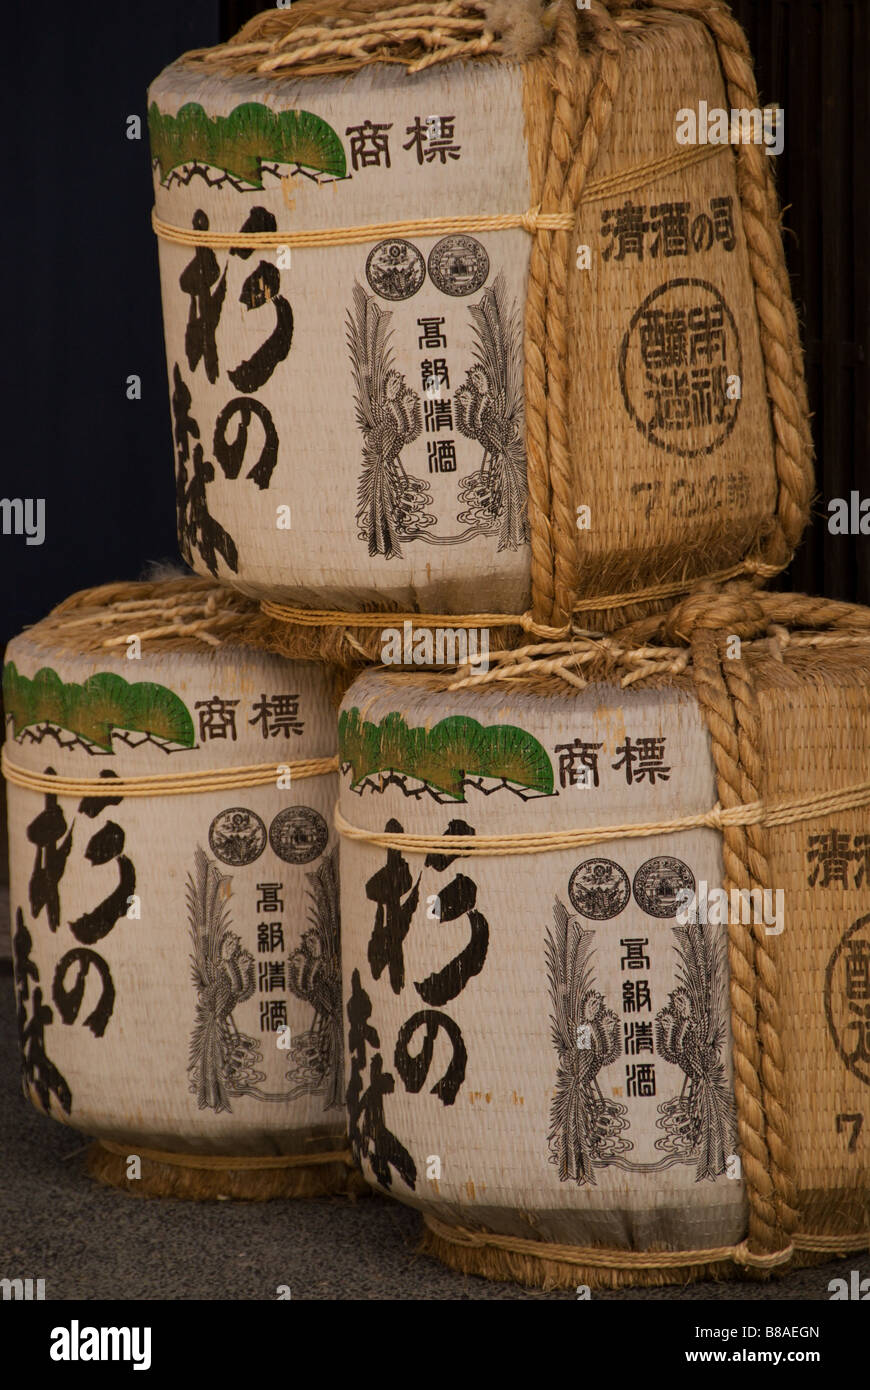 A stack of three sake barrels from the Suginomori brewery in Narai Nagano Japan Stock Photo